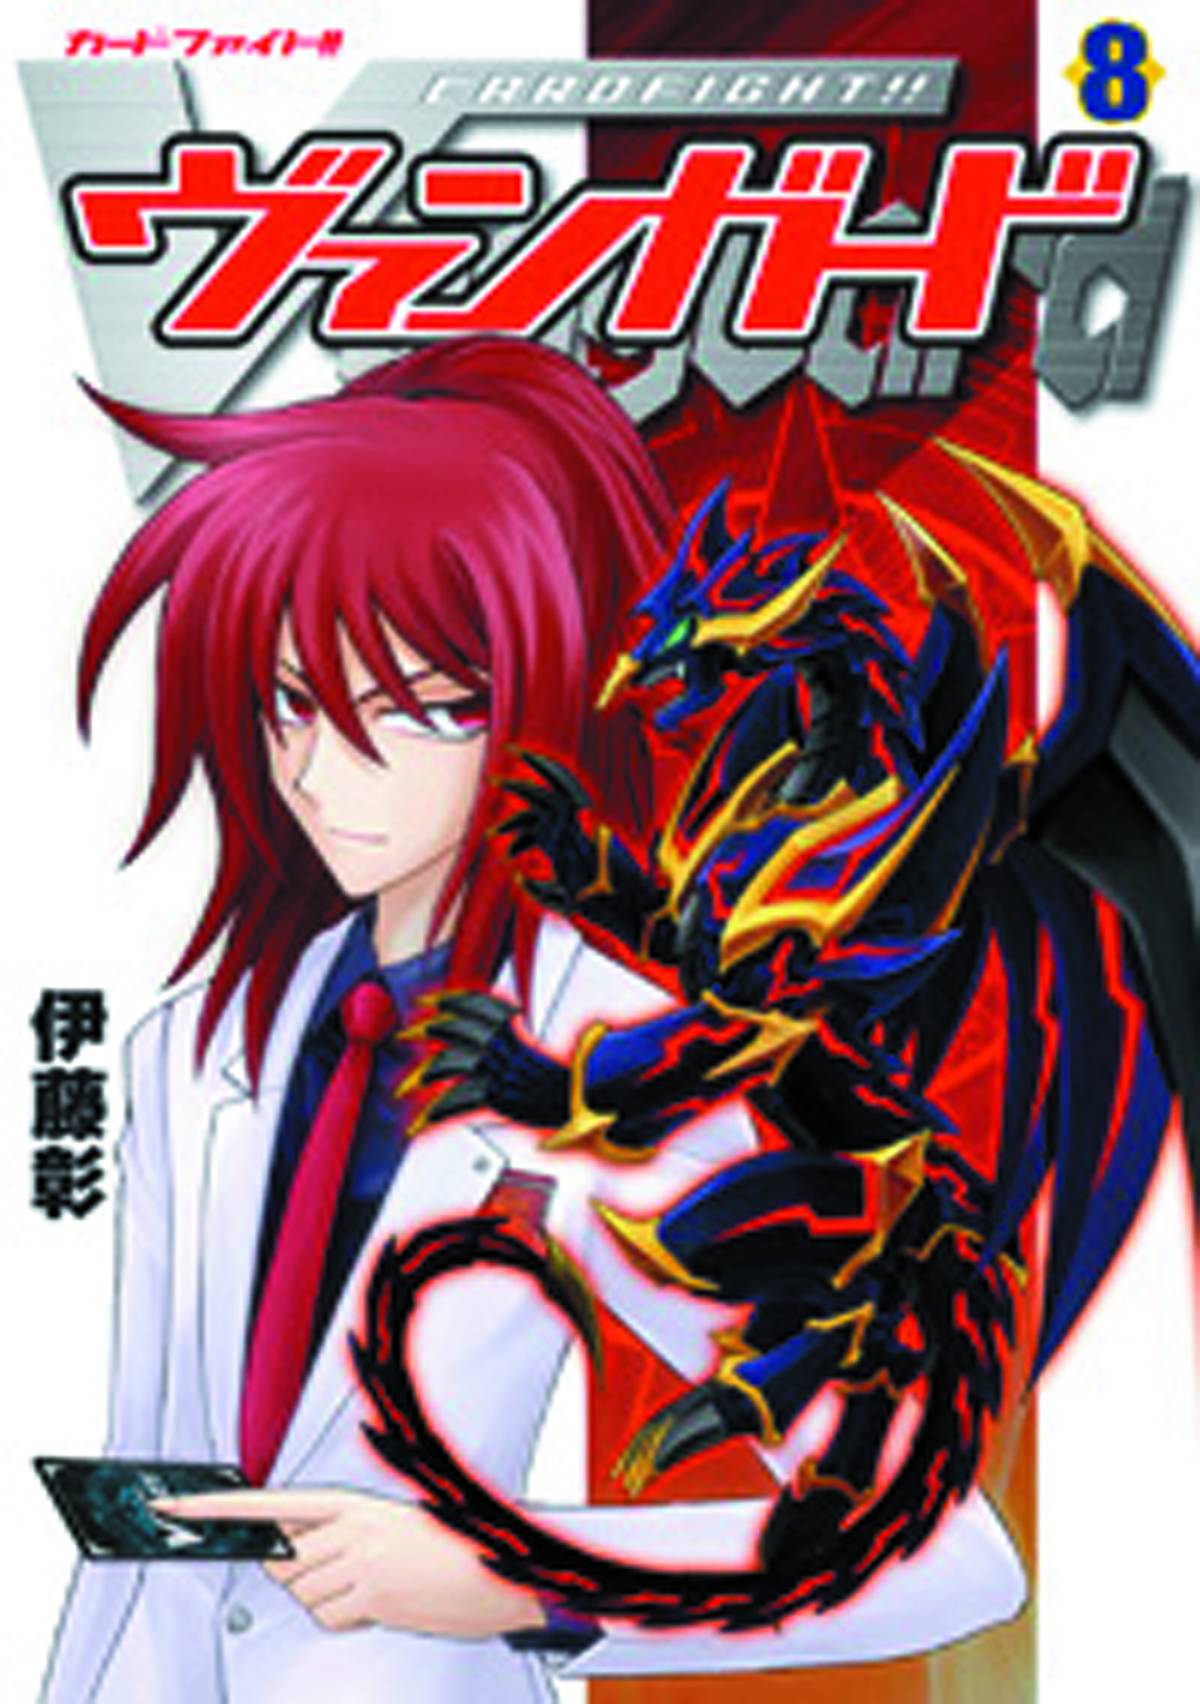 Cardfight Vanguard Manga Volume 8